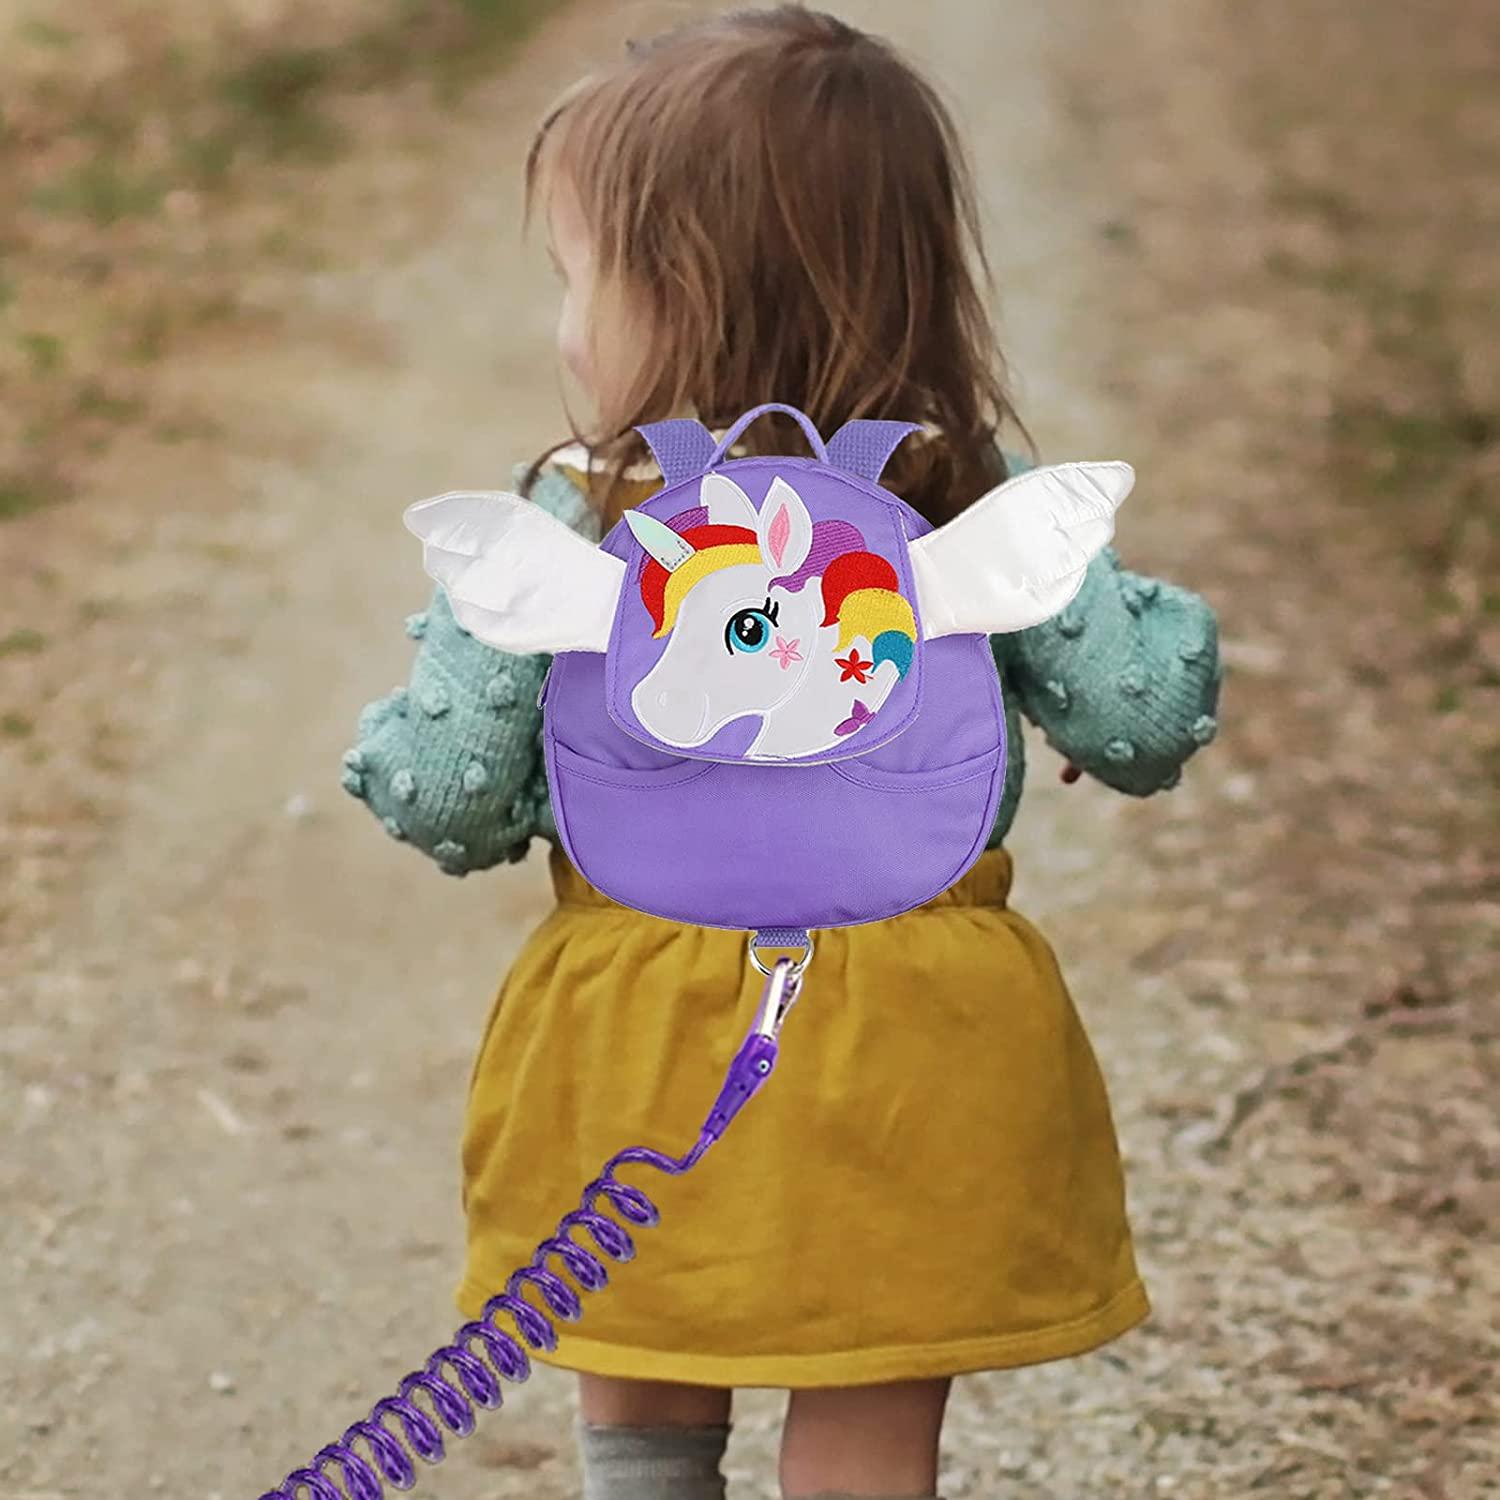 Accmor Toddler Harness Backpack Leash, Cute Dinosaur Backpacks